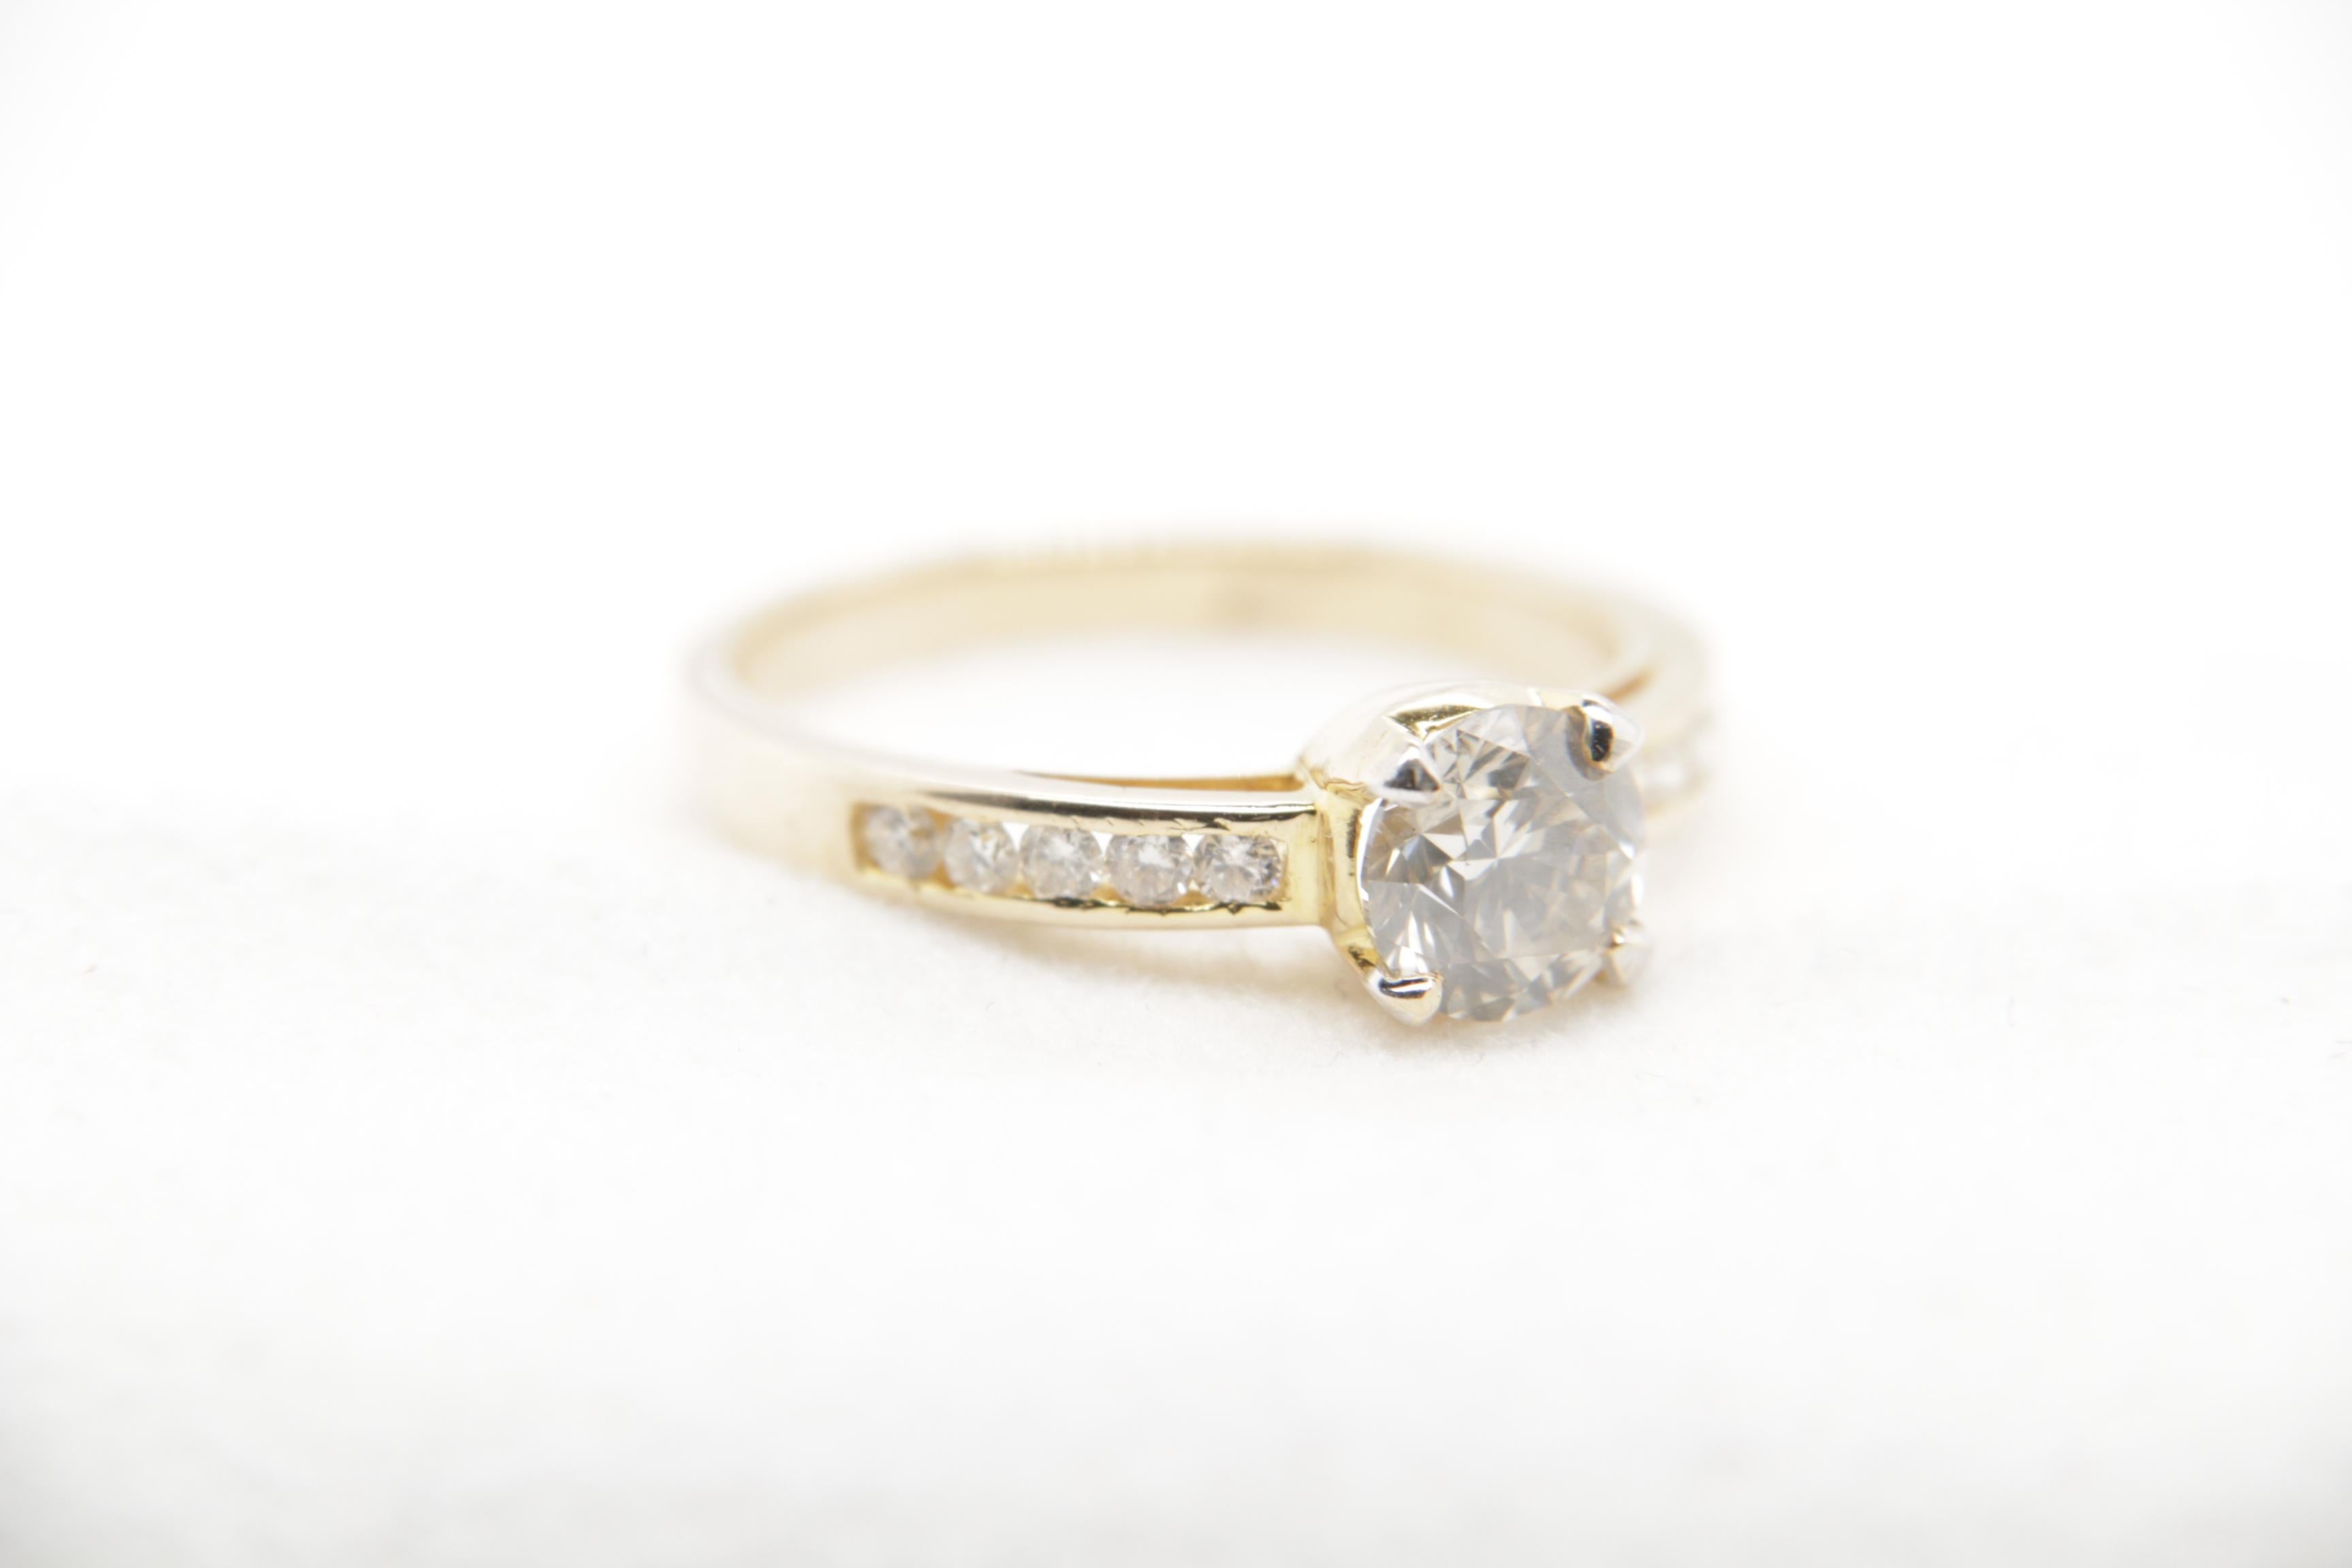 A brand new diamond ring in 18 karat gold. The total diamond weight is 1.01 carat and total ring weight is 3.05 grams.